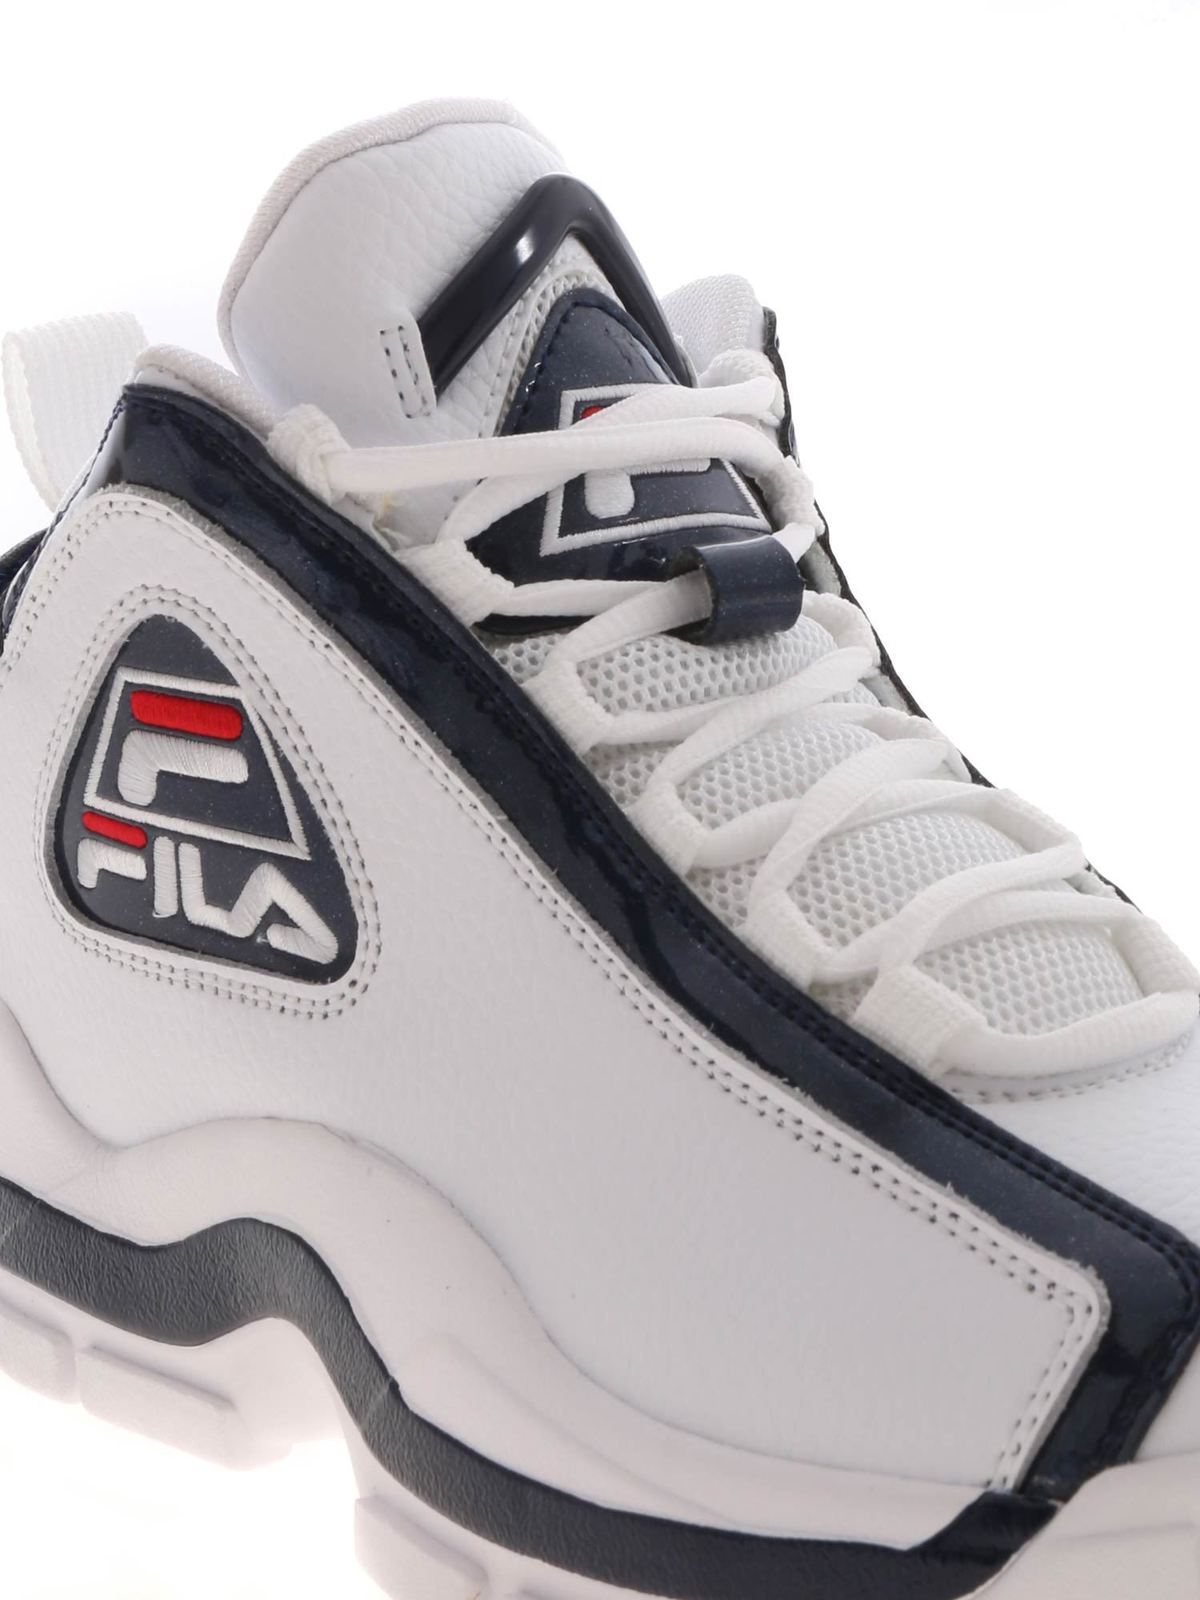 Fila - Grant Hill 2 sneakers in white 